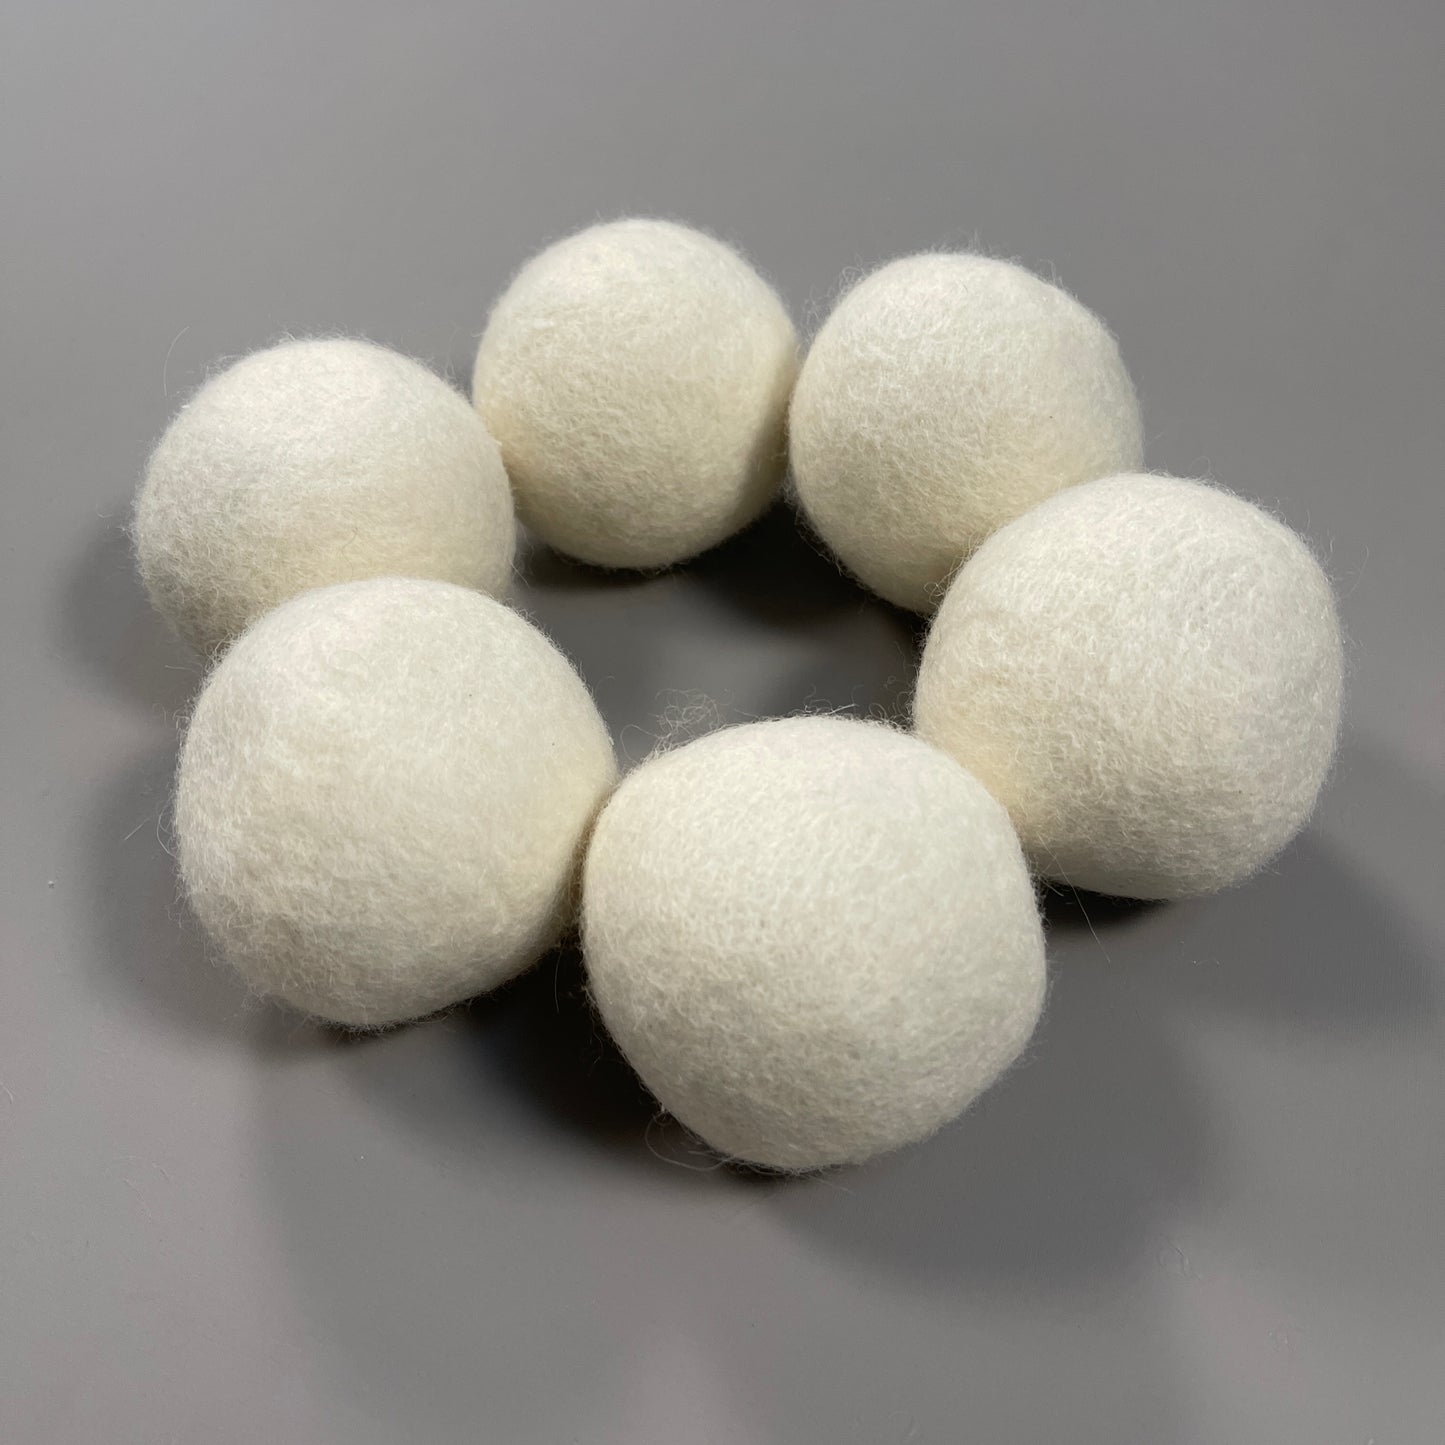 ECOIGY Handmade Wool Dryer Balls 100% New Zealand Wool Set of 6 White XL (New)